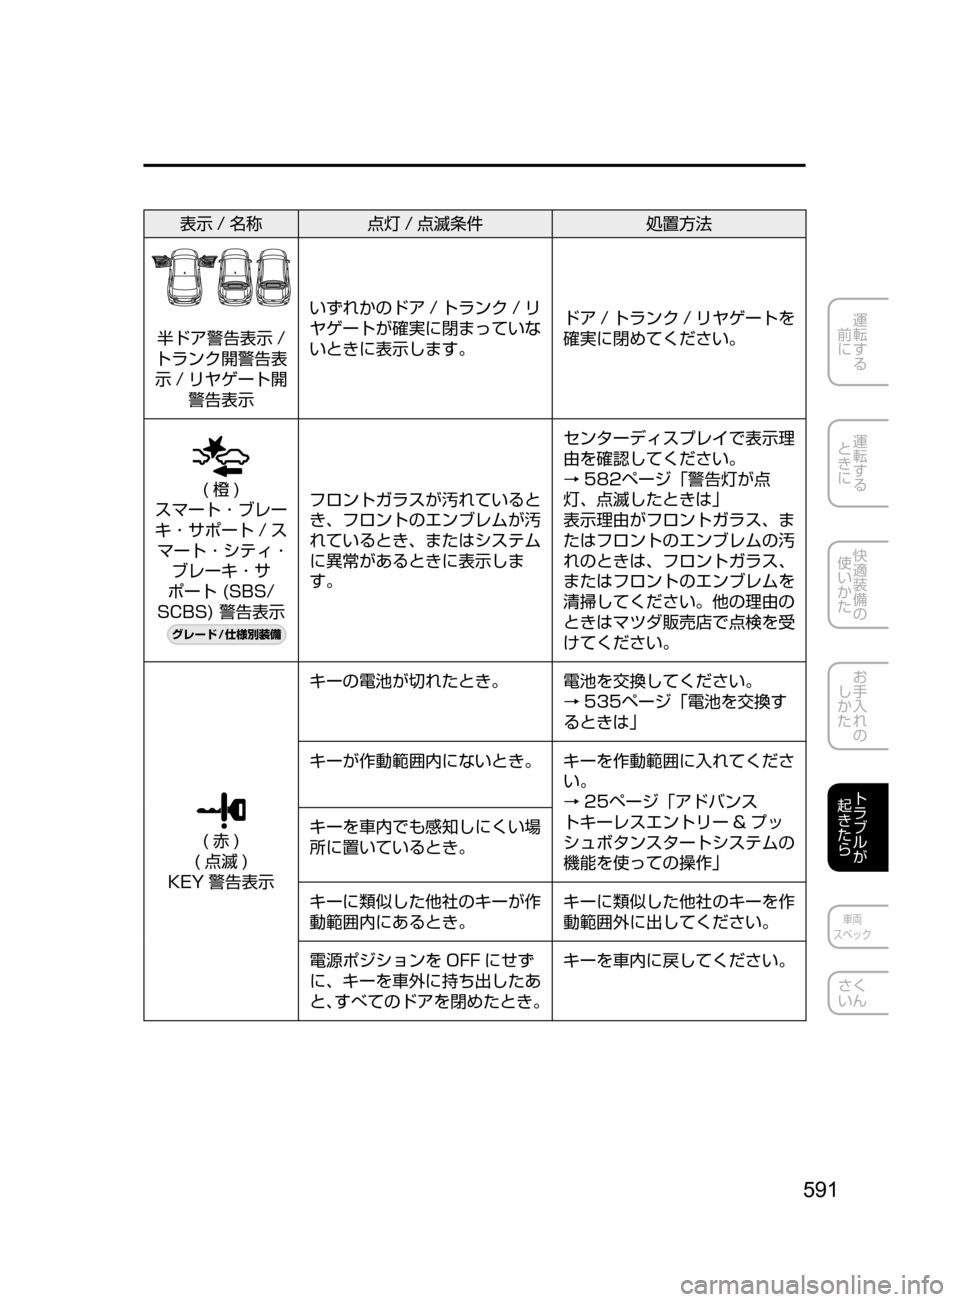 MAZDA MODEL ATENZA 2016  アテンザ｜取扱説明書 (in Japanese) 591
運転する
﻿﻿
前に
運転する
﻿﻿
ときに
快適装備の
使いかた
お手入れの
しかた
トラブルが
起きたら
車両
スペック
さく
いん
表示 / 名称 点�